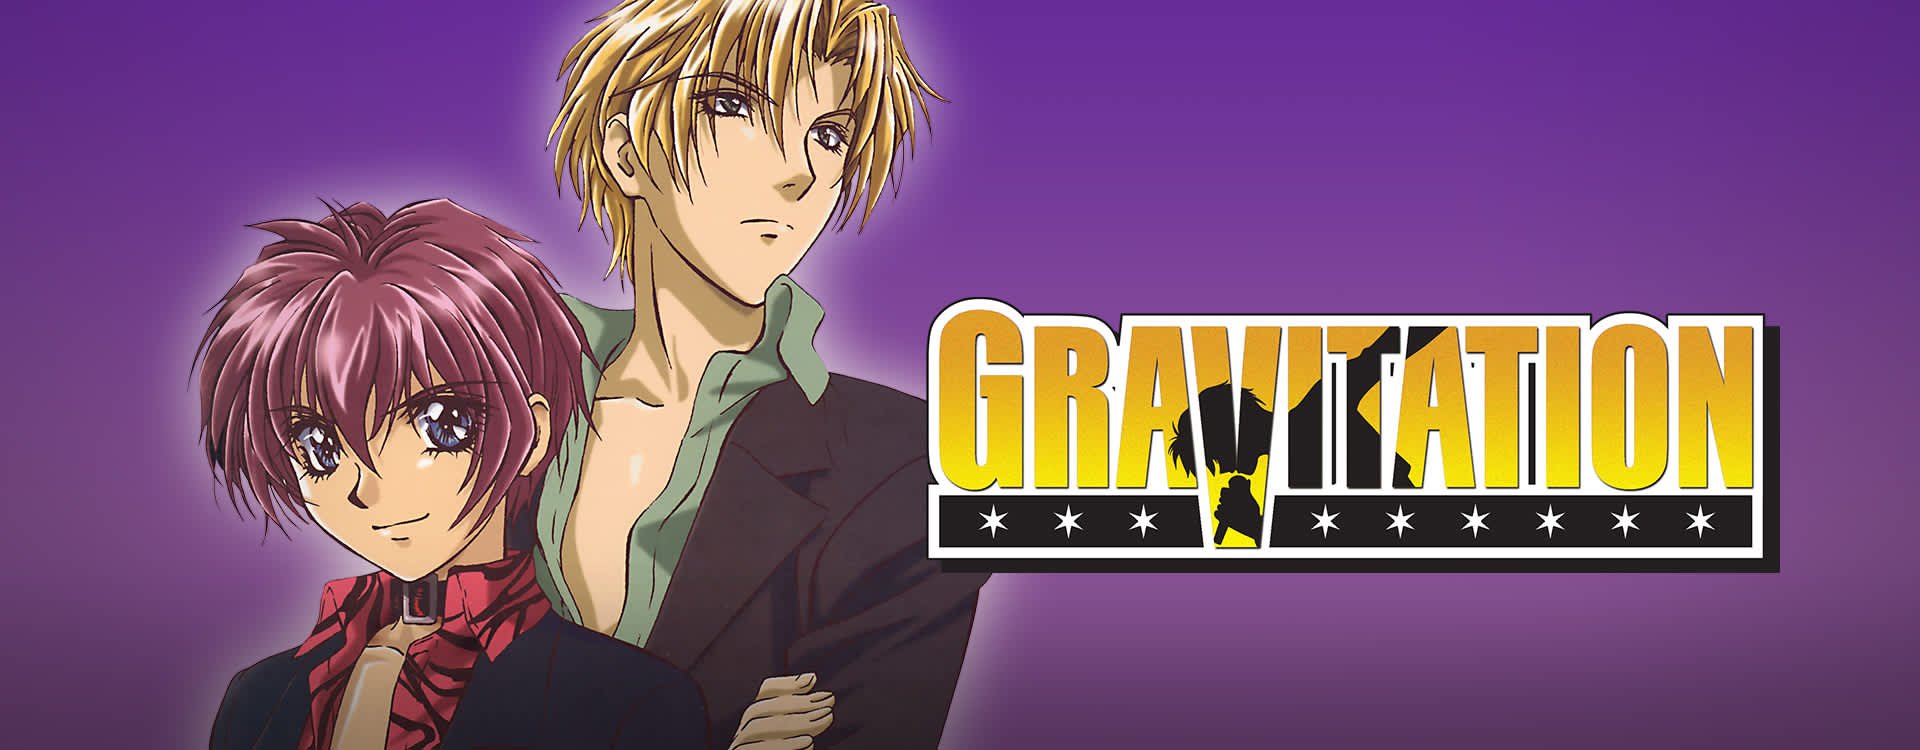 Gravitation Wallpaper #2 (Anime Wallpapers.com)